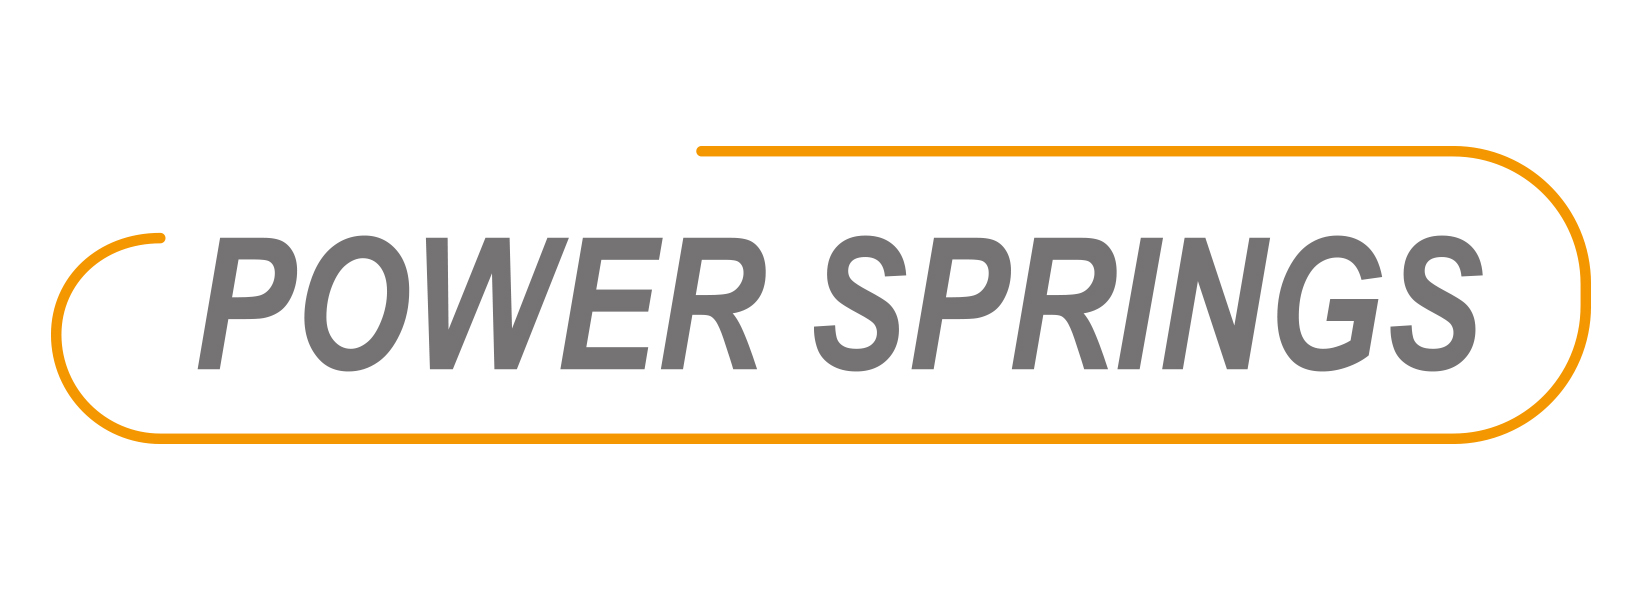 Power Springs for set 23, 64 springs - Standard Edition